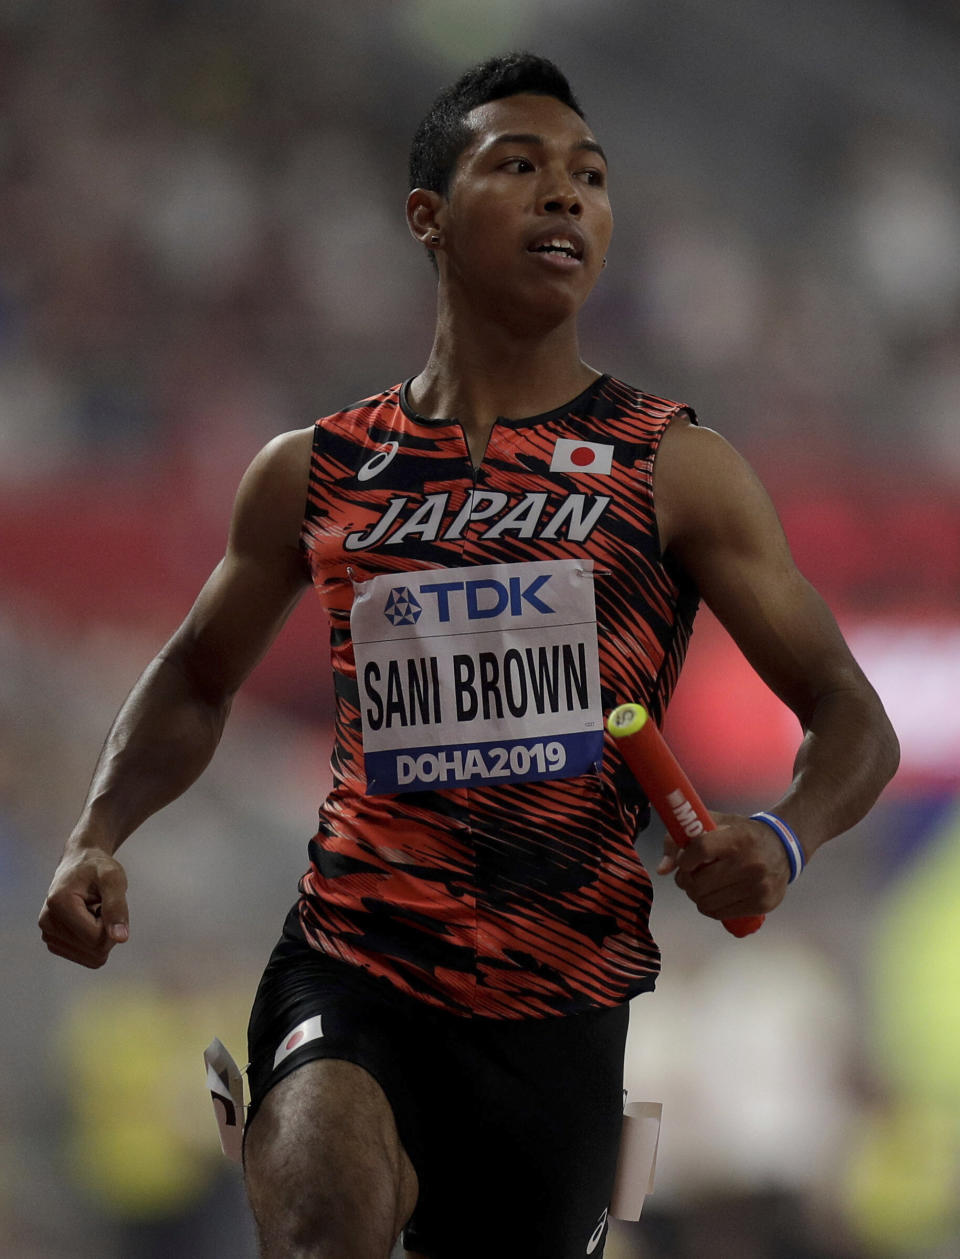 Japan's Abdul Hakim Sani Brown races in a men's 4x100 meter relay semifinal at the World Athletics Championships in Doha, Qatar, Friday, Oct. 4, 2019. (AP Photo/Petr David Josek)